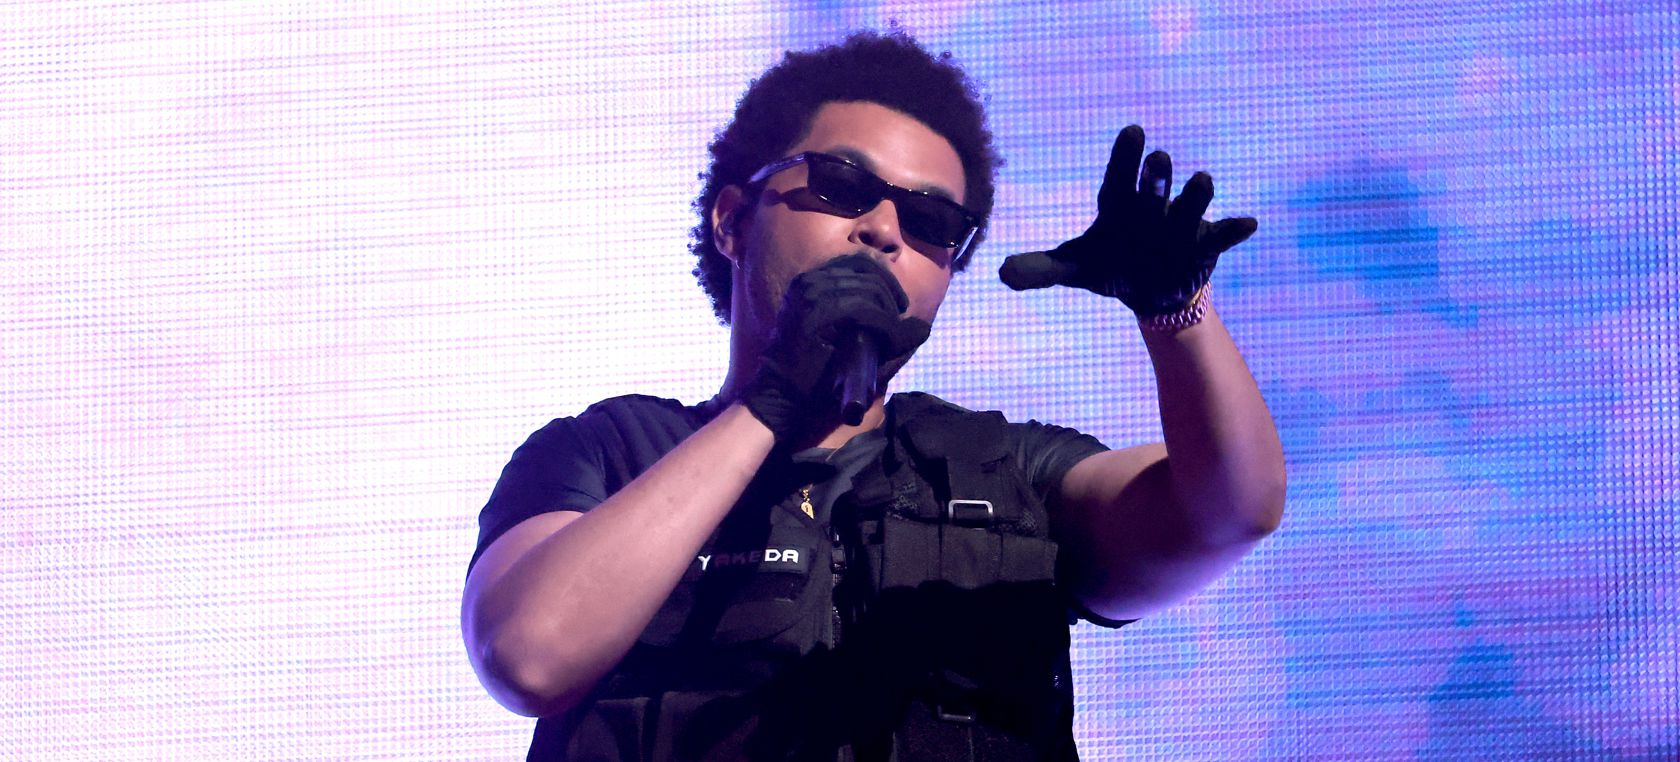 Muere un hombre en la primera fecha de la gira de The Weeknd